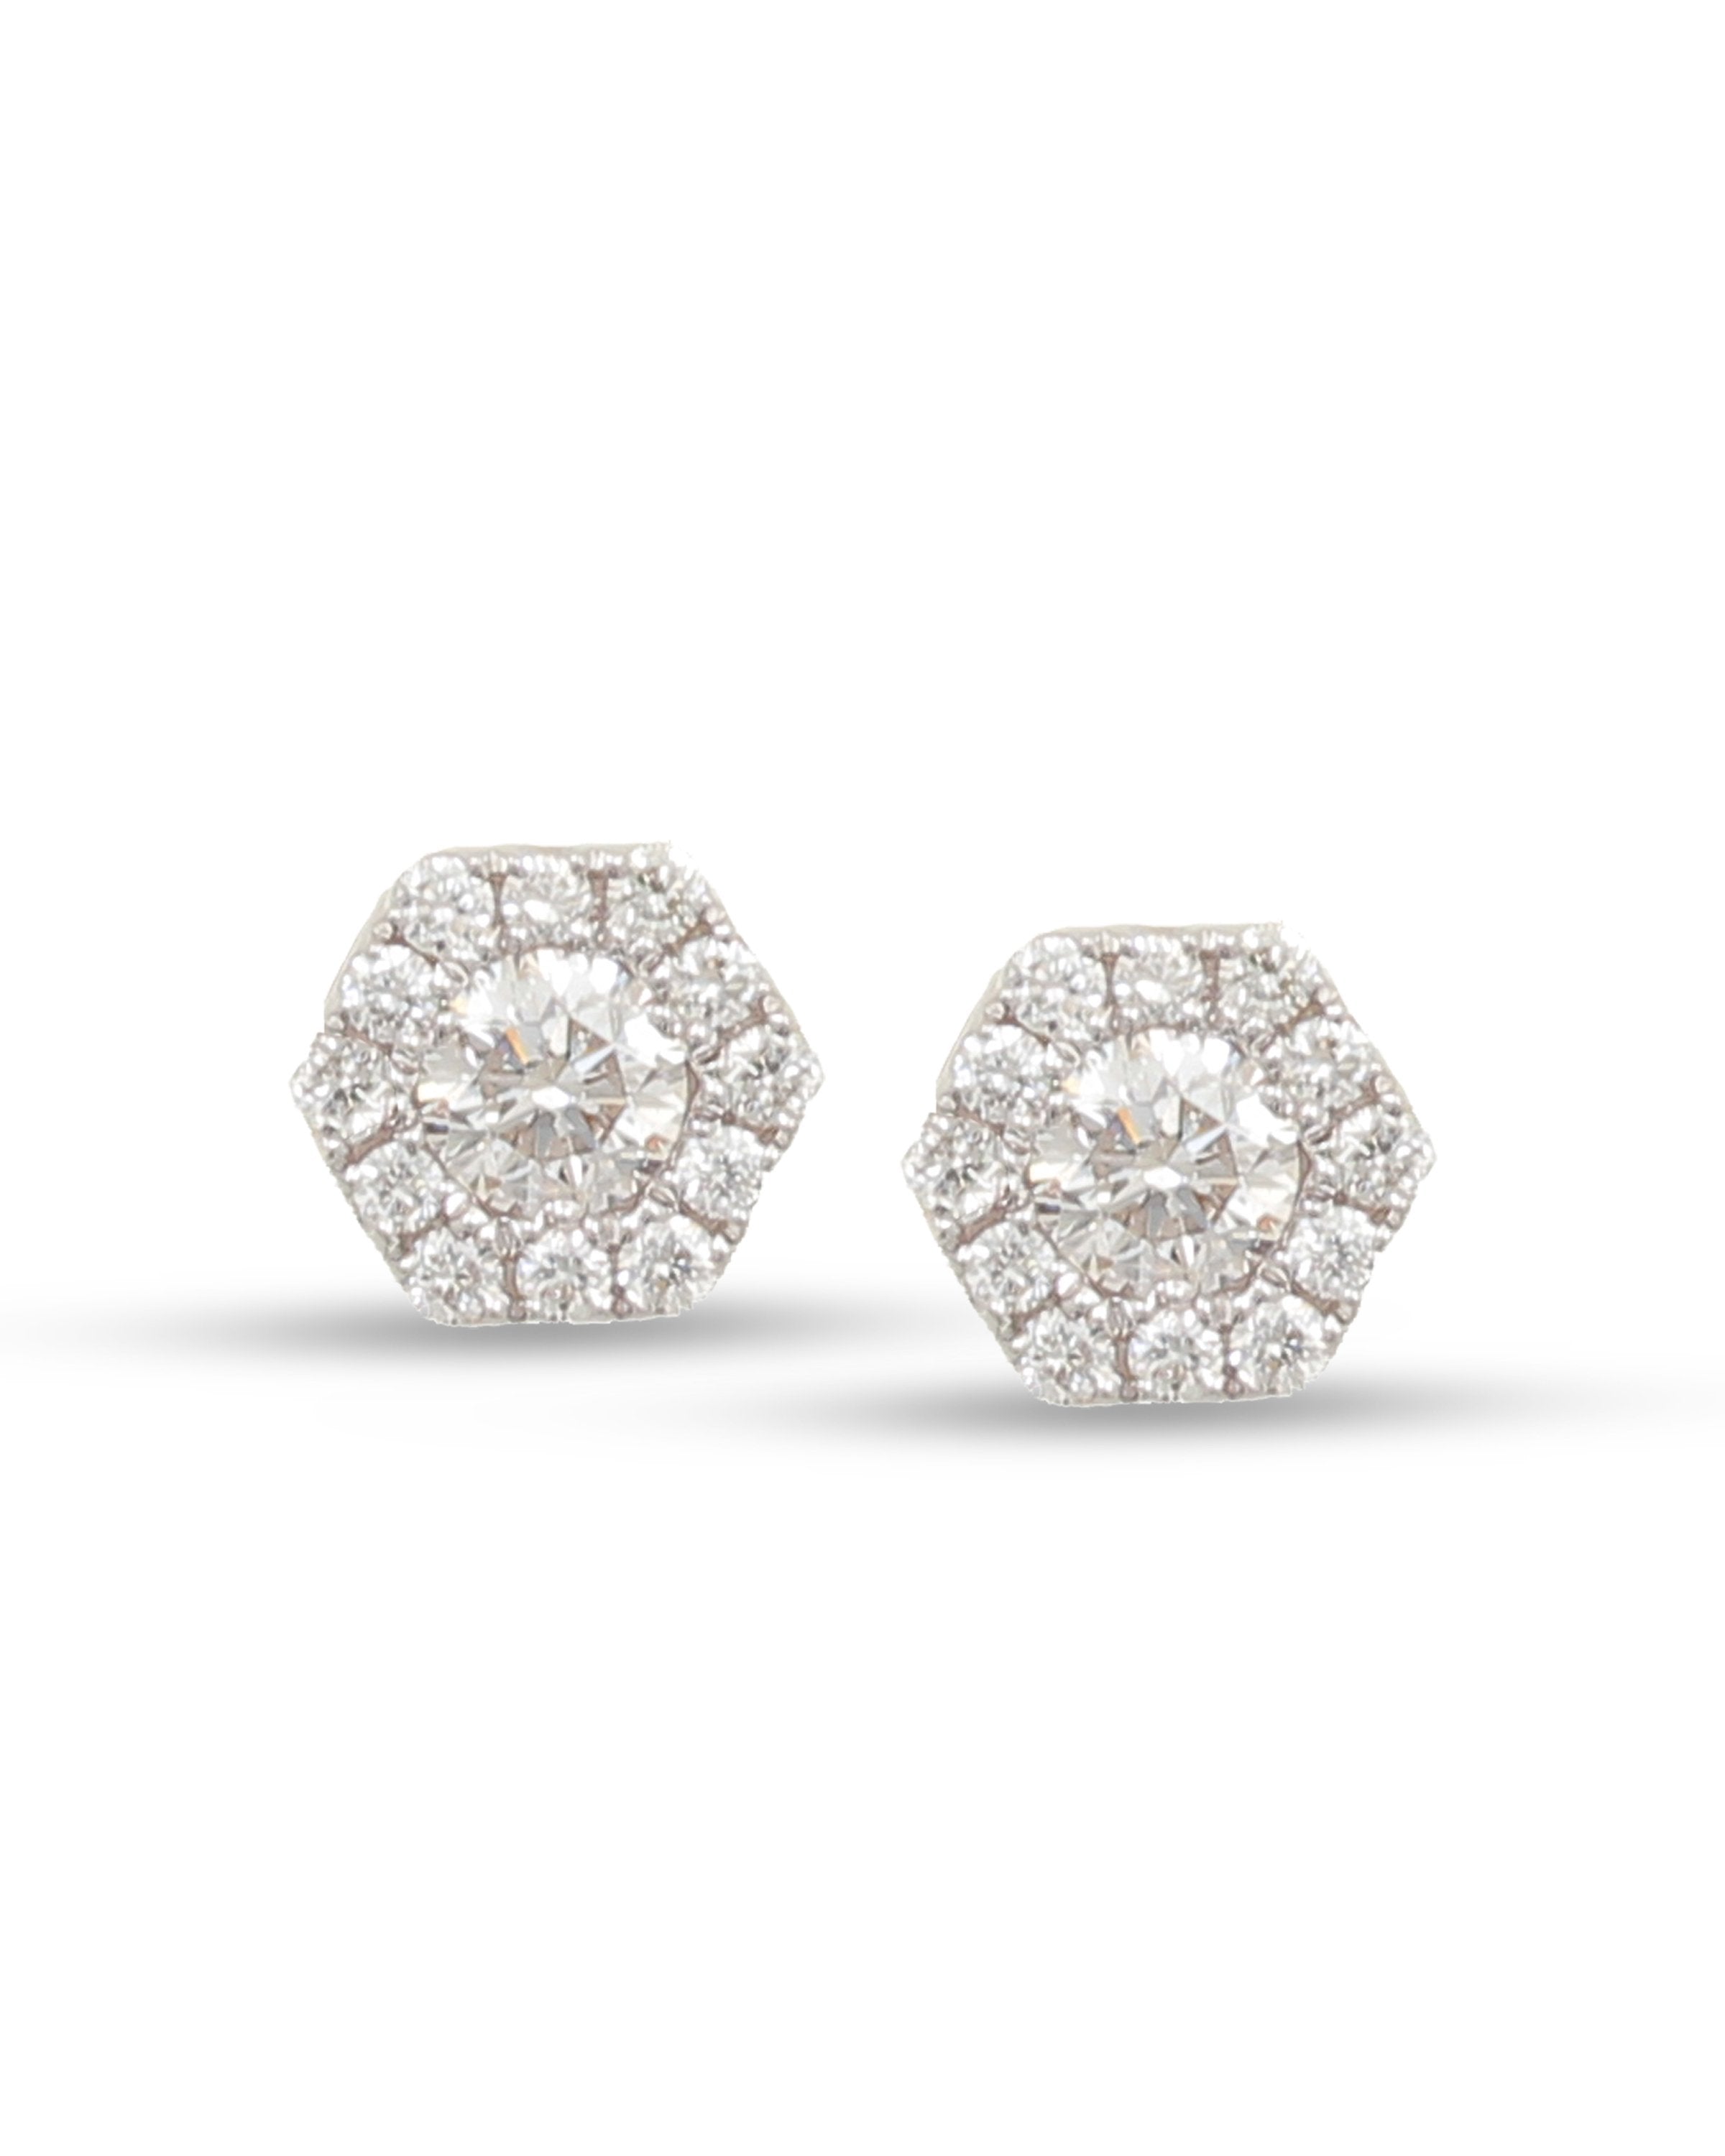 frederic sage diamond studs white gold earrings e2307-w diamond earrings